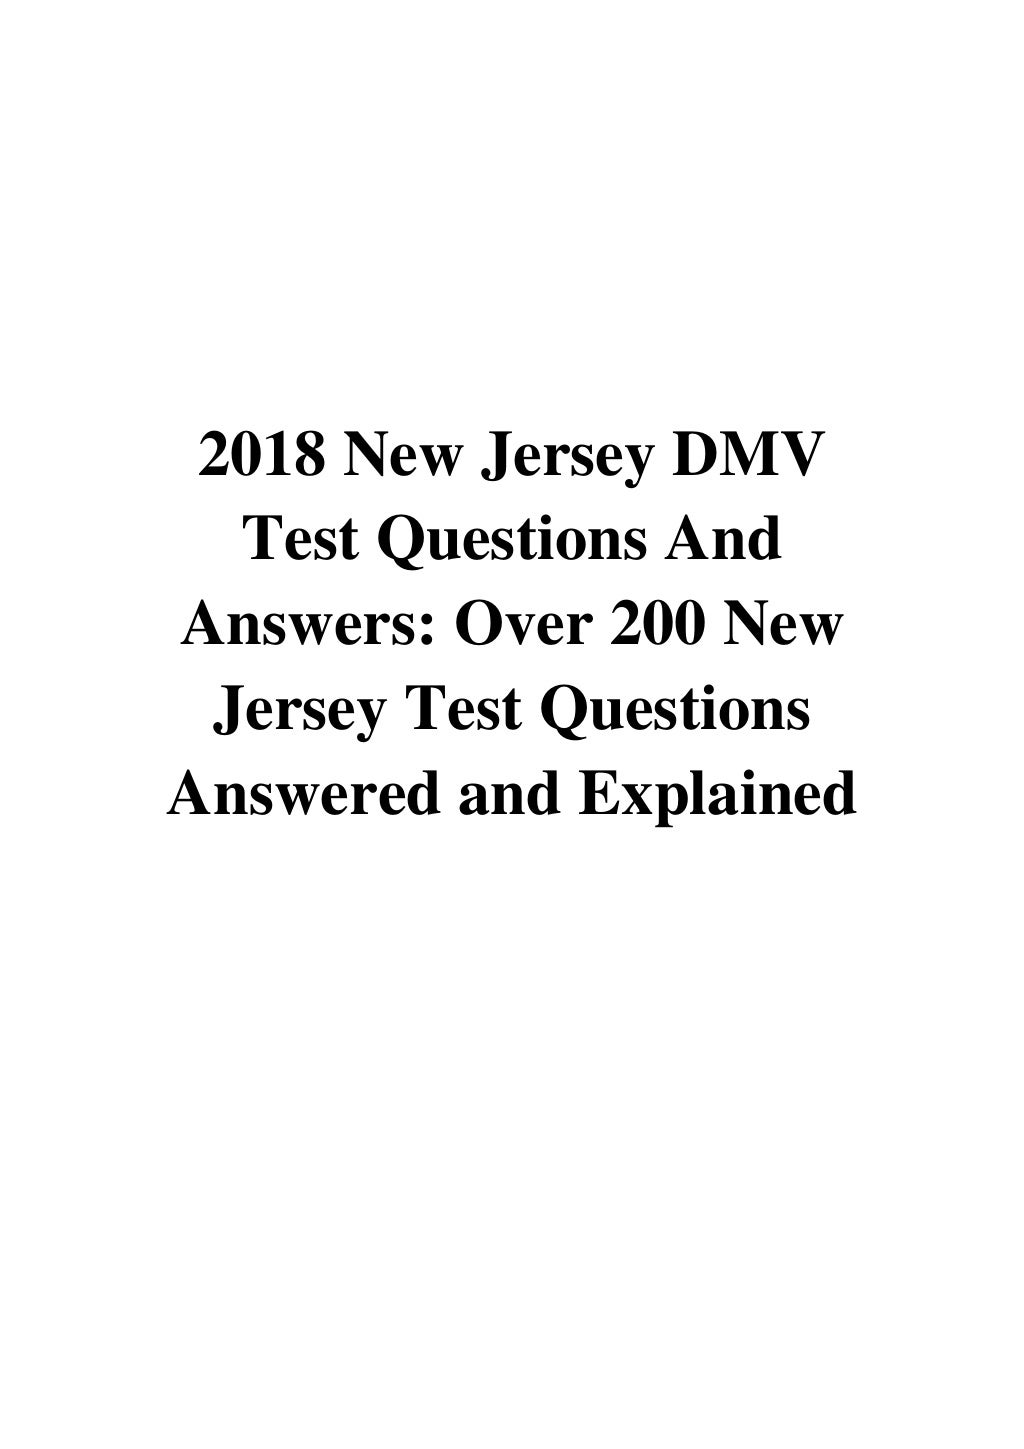 nj dmv written test 2018 symbols